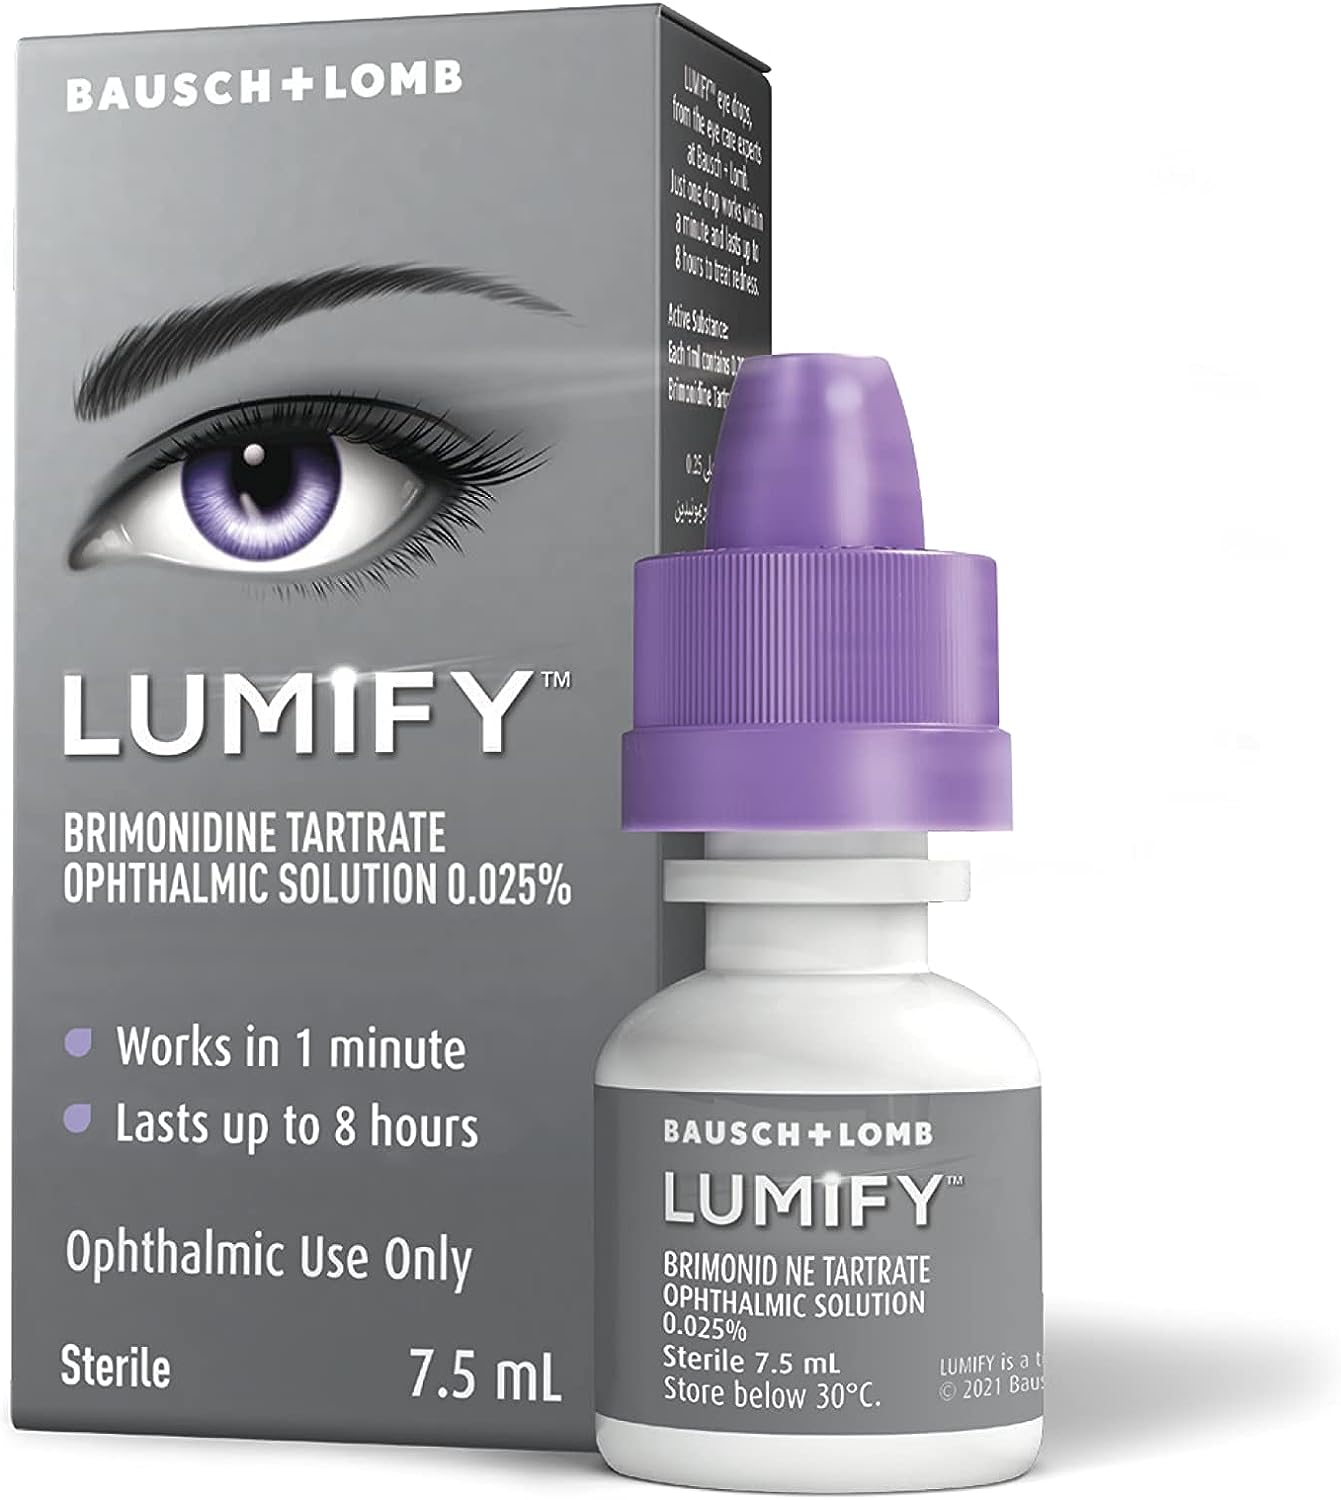 Lumify eye drops